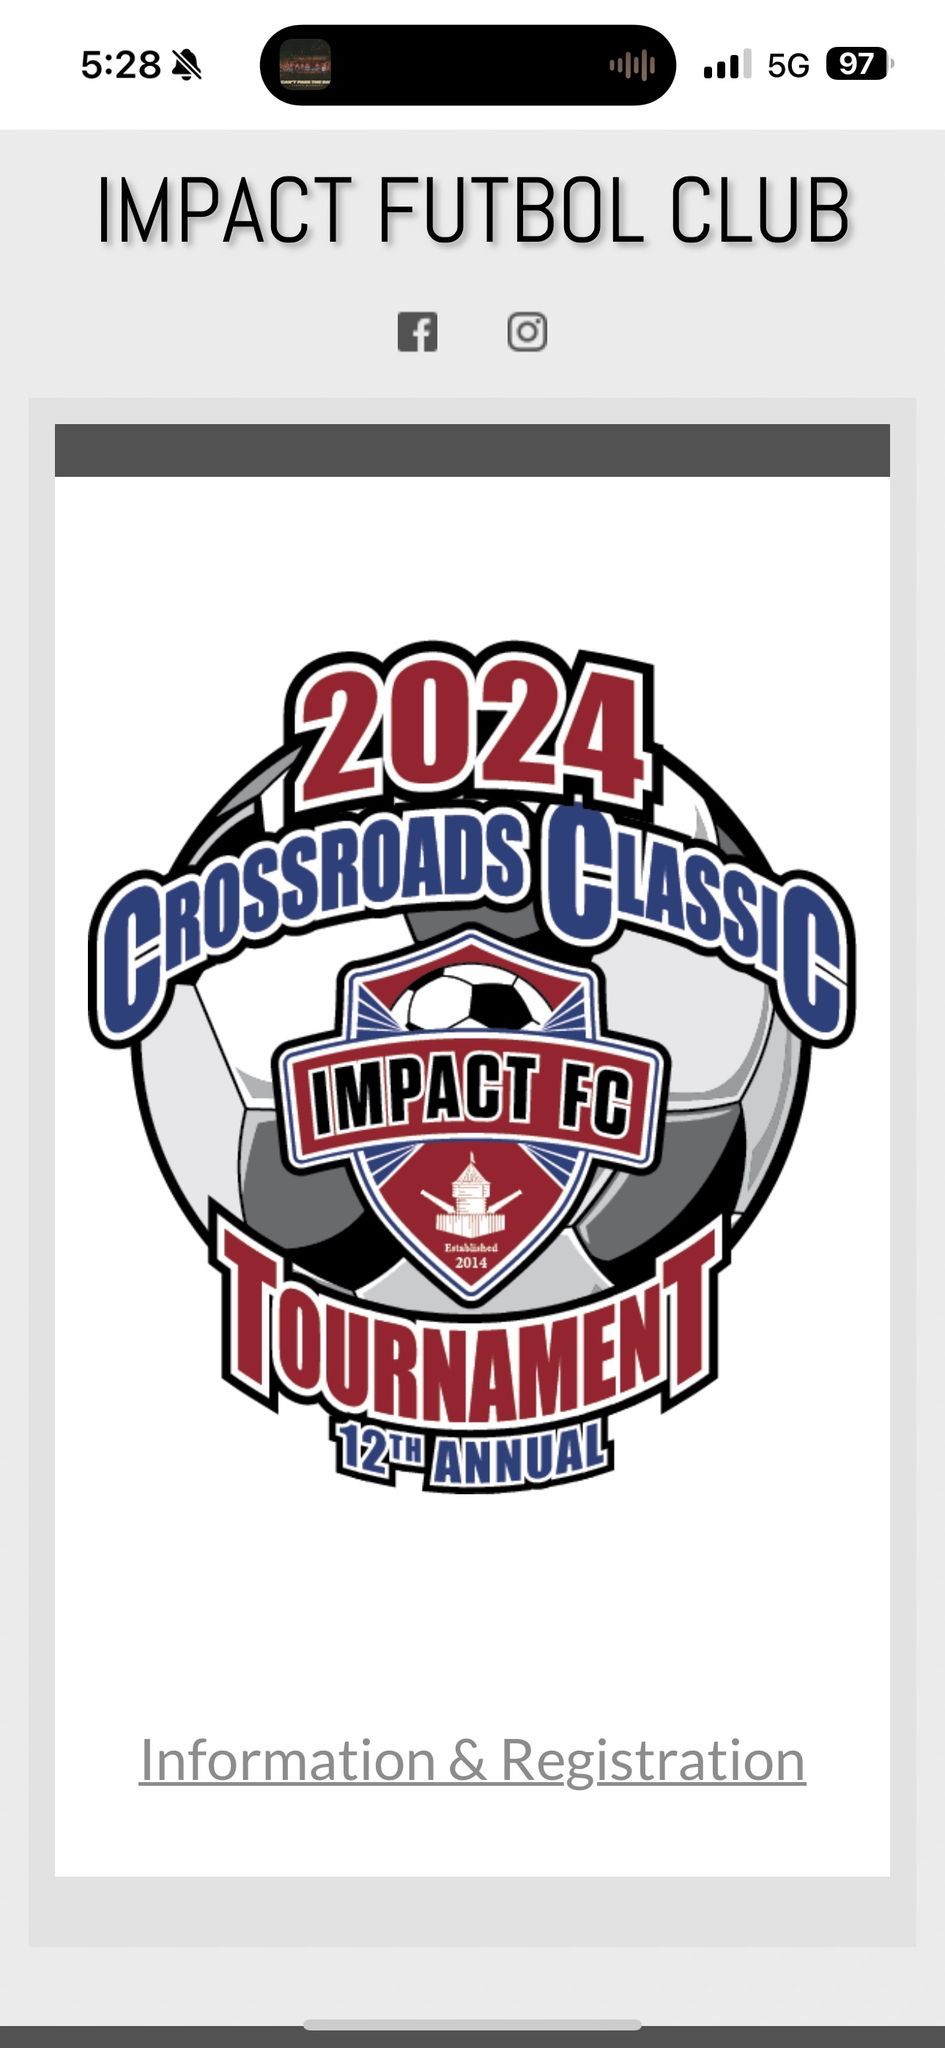 Sno Biz of Mocksville will serve at Impact Futbol Club\u2019s Crossroads Classic Soccer Tournament